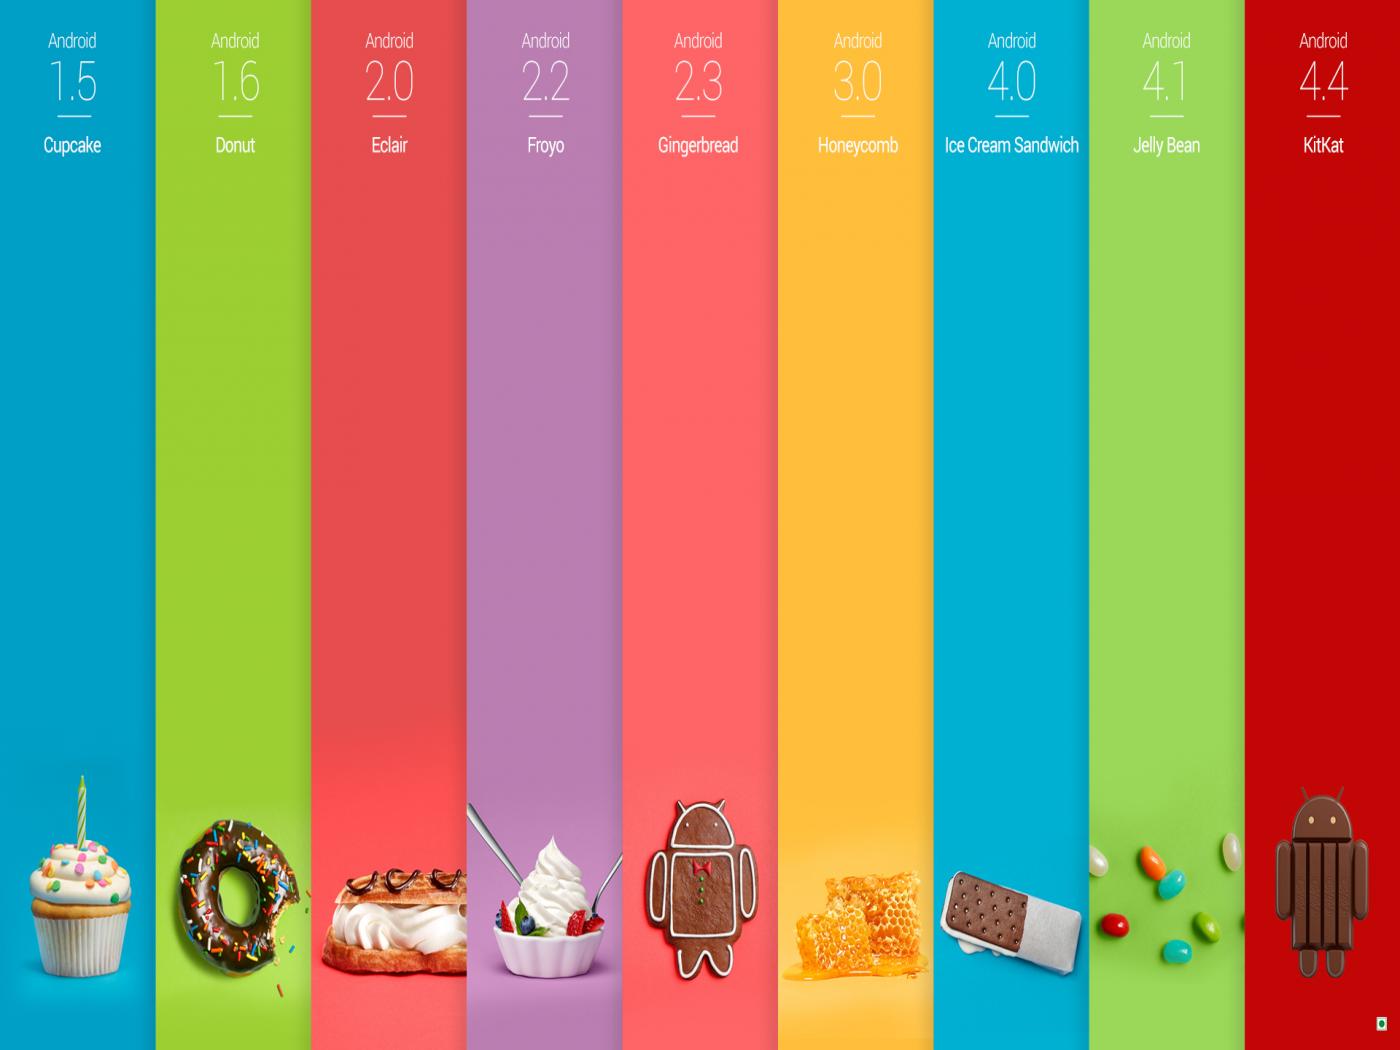 Android Kitkat HD Wallpaper